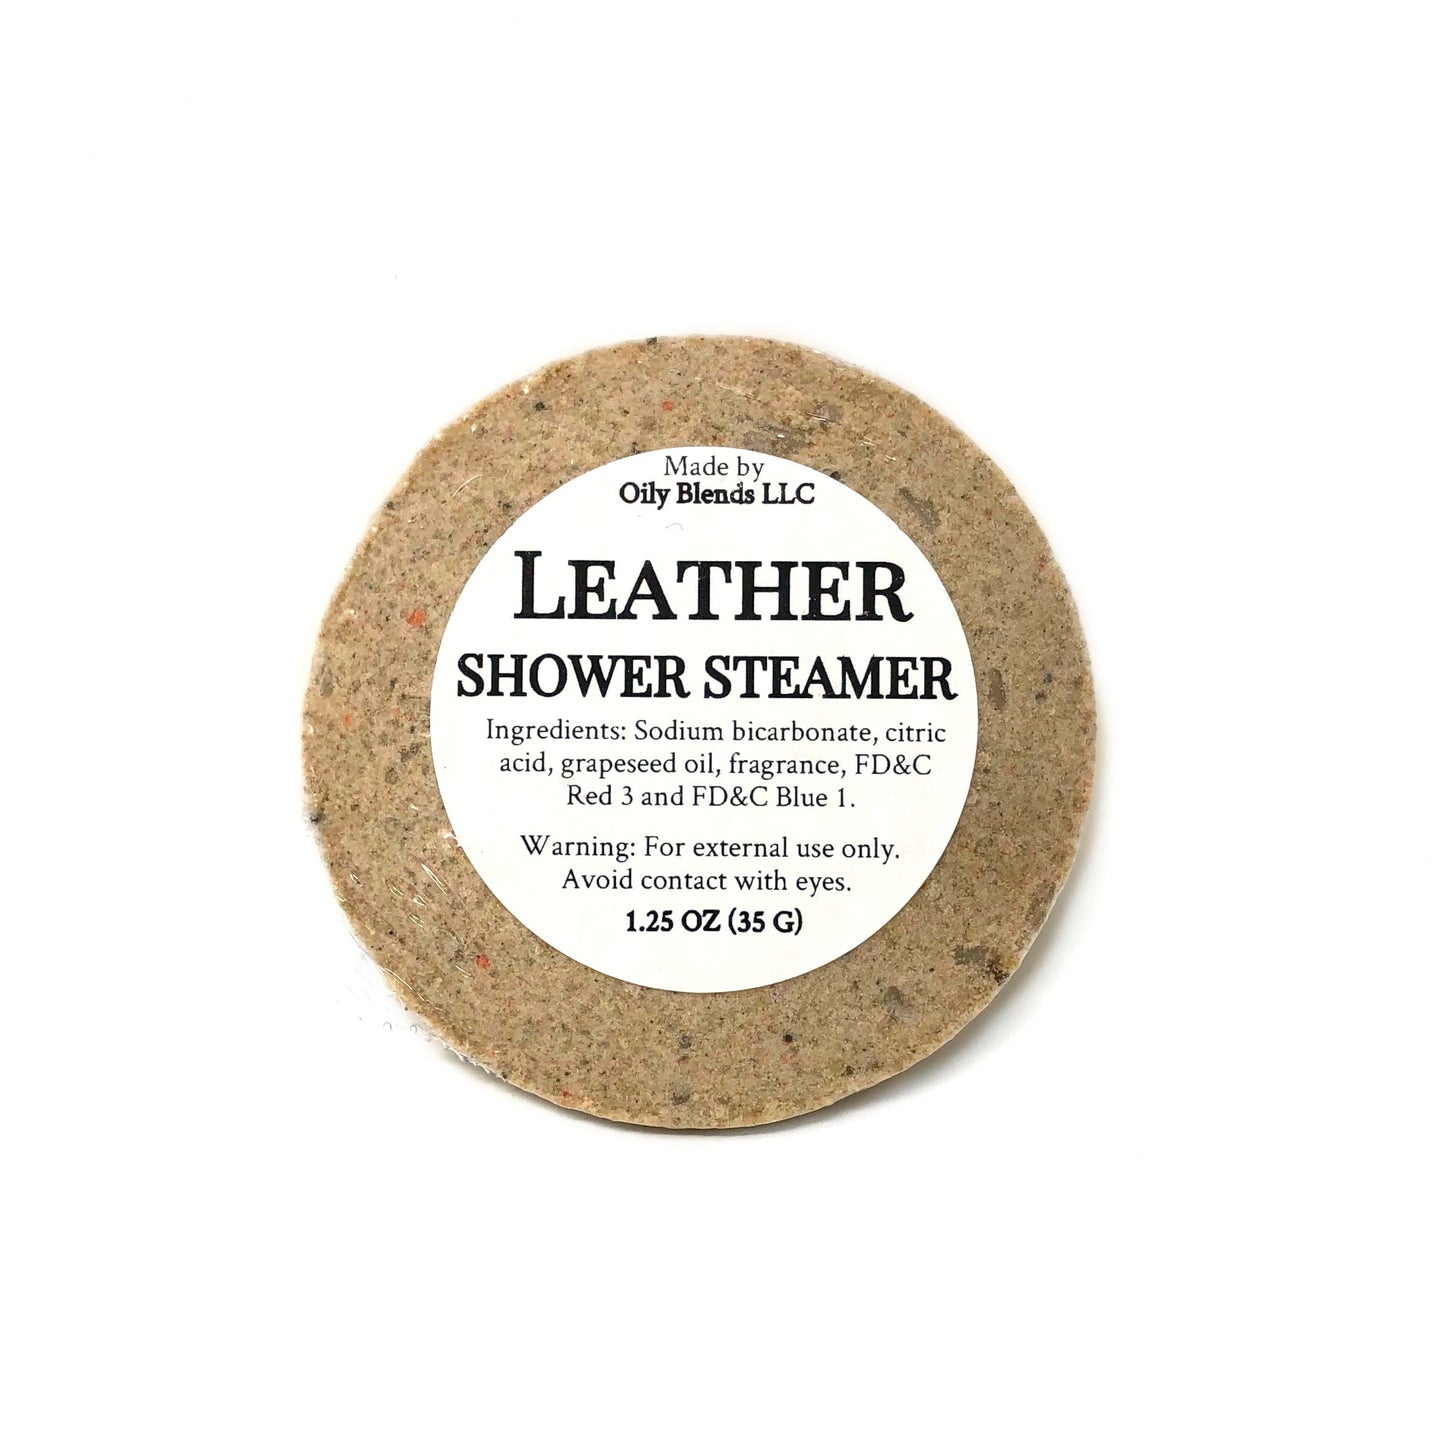 Men's Shower Steamers